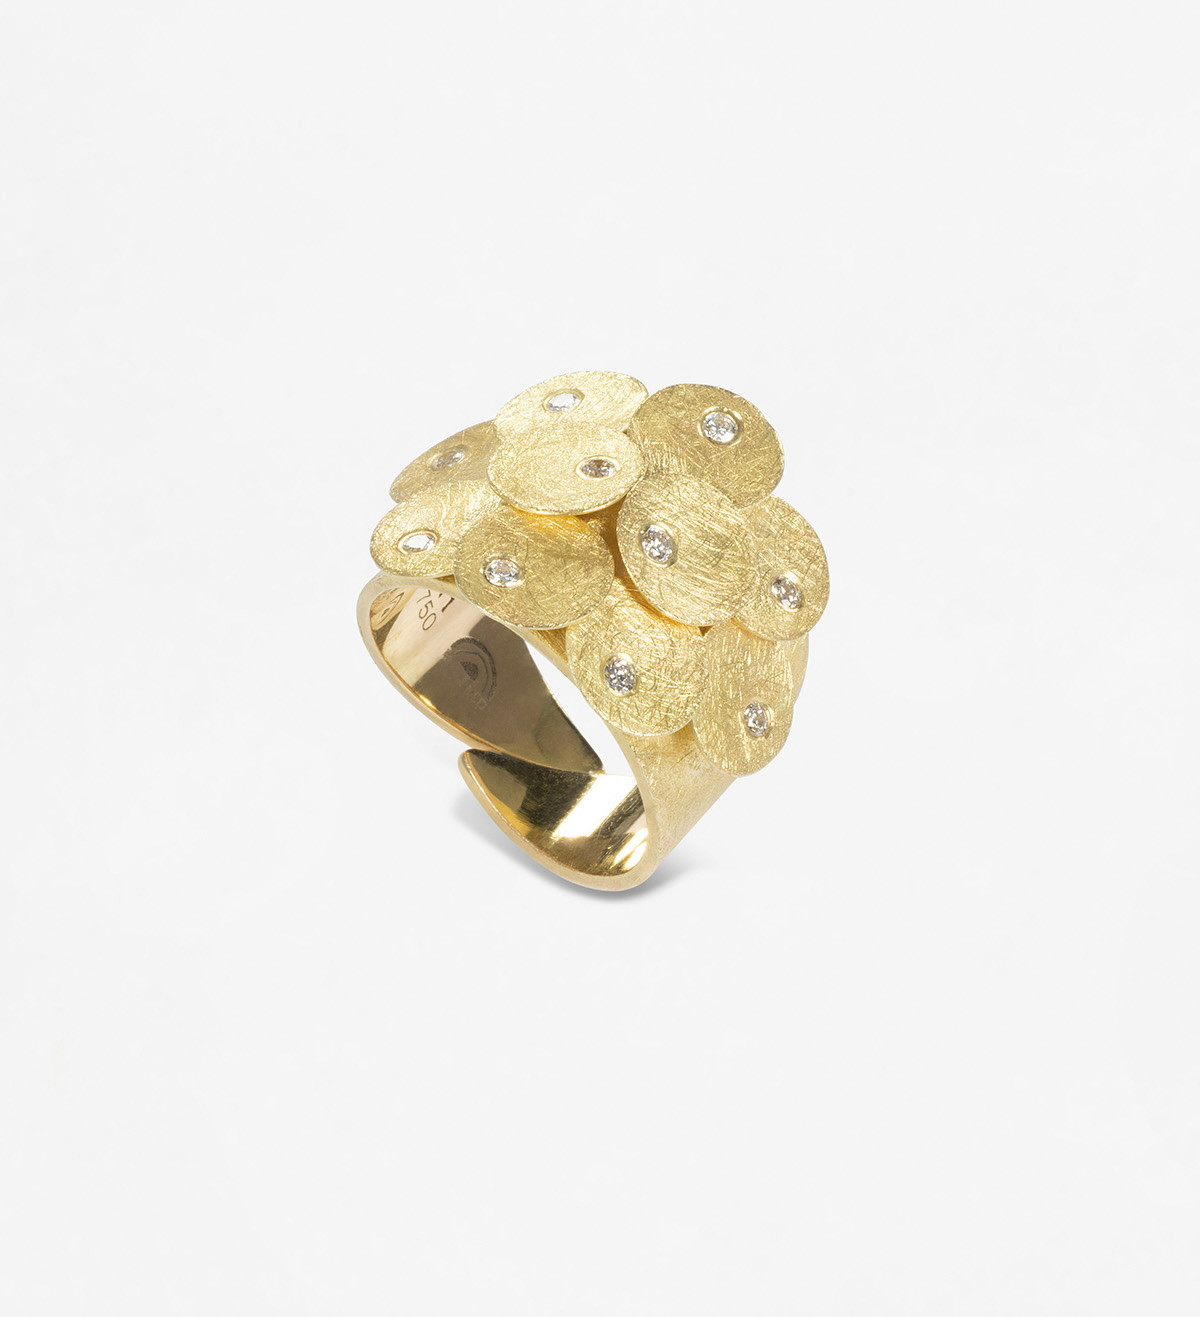 18k gold ring Flô 20mm with diamonds 0,25ct